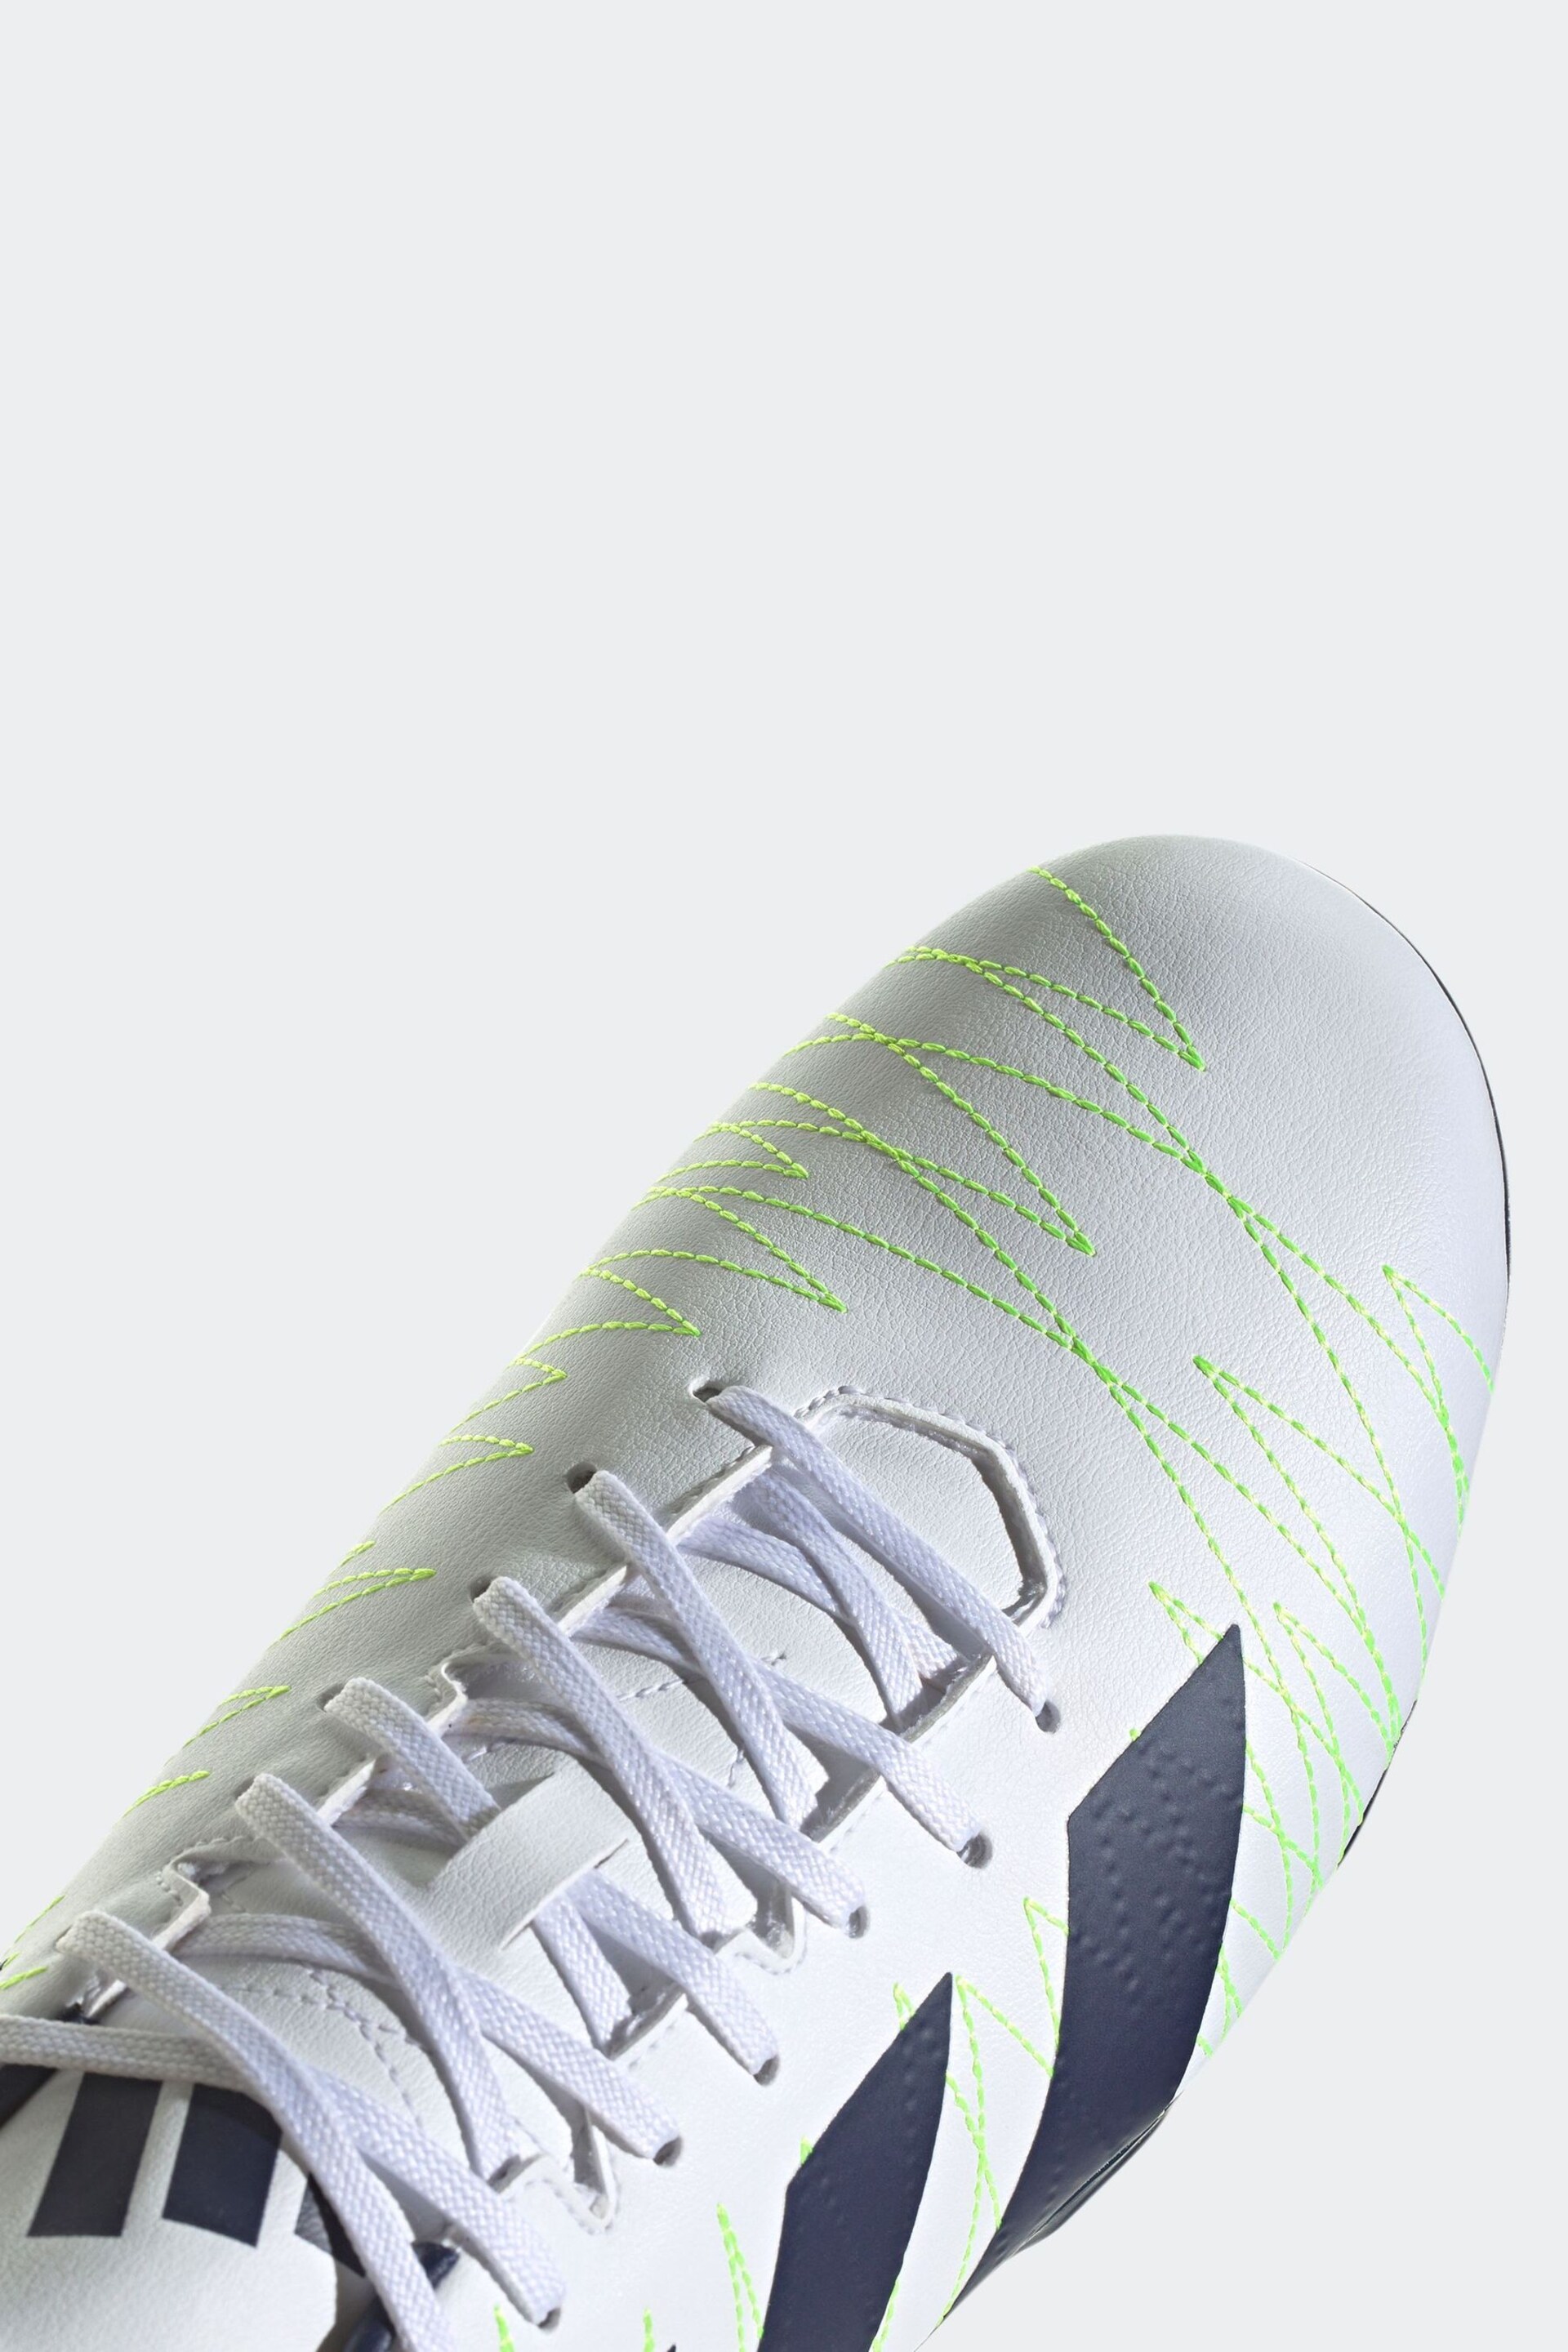 adidas White/Blue Performance Kakari SG Boots - Image 9 of 11